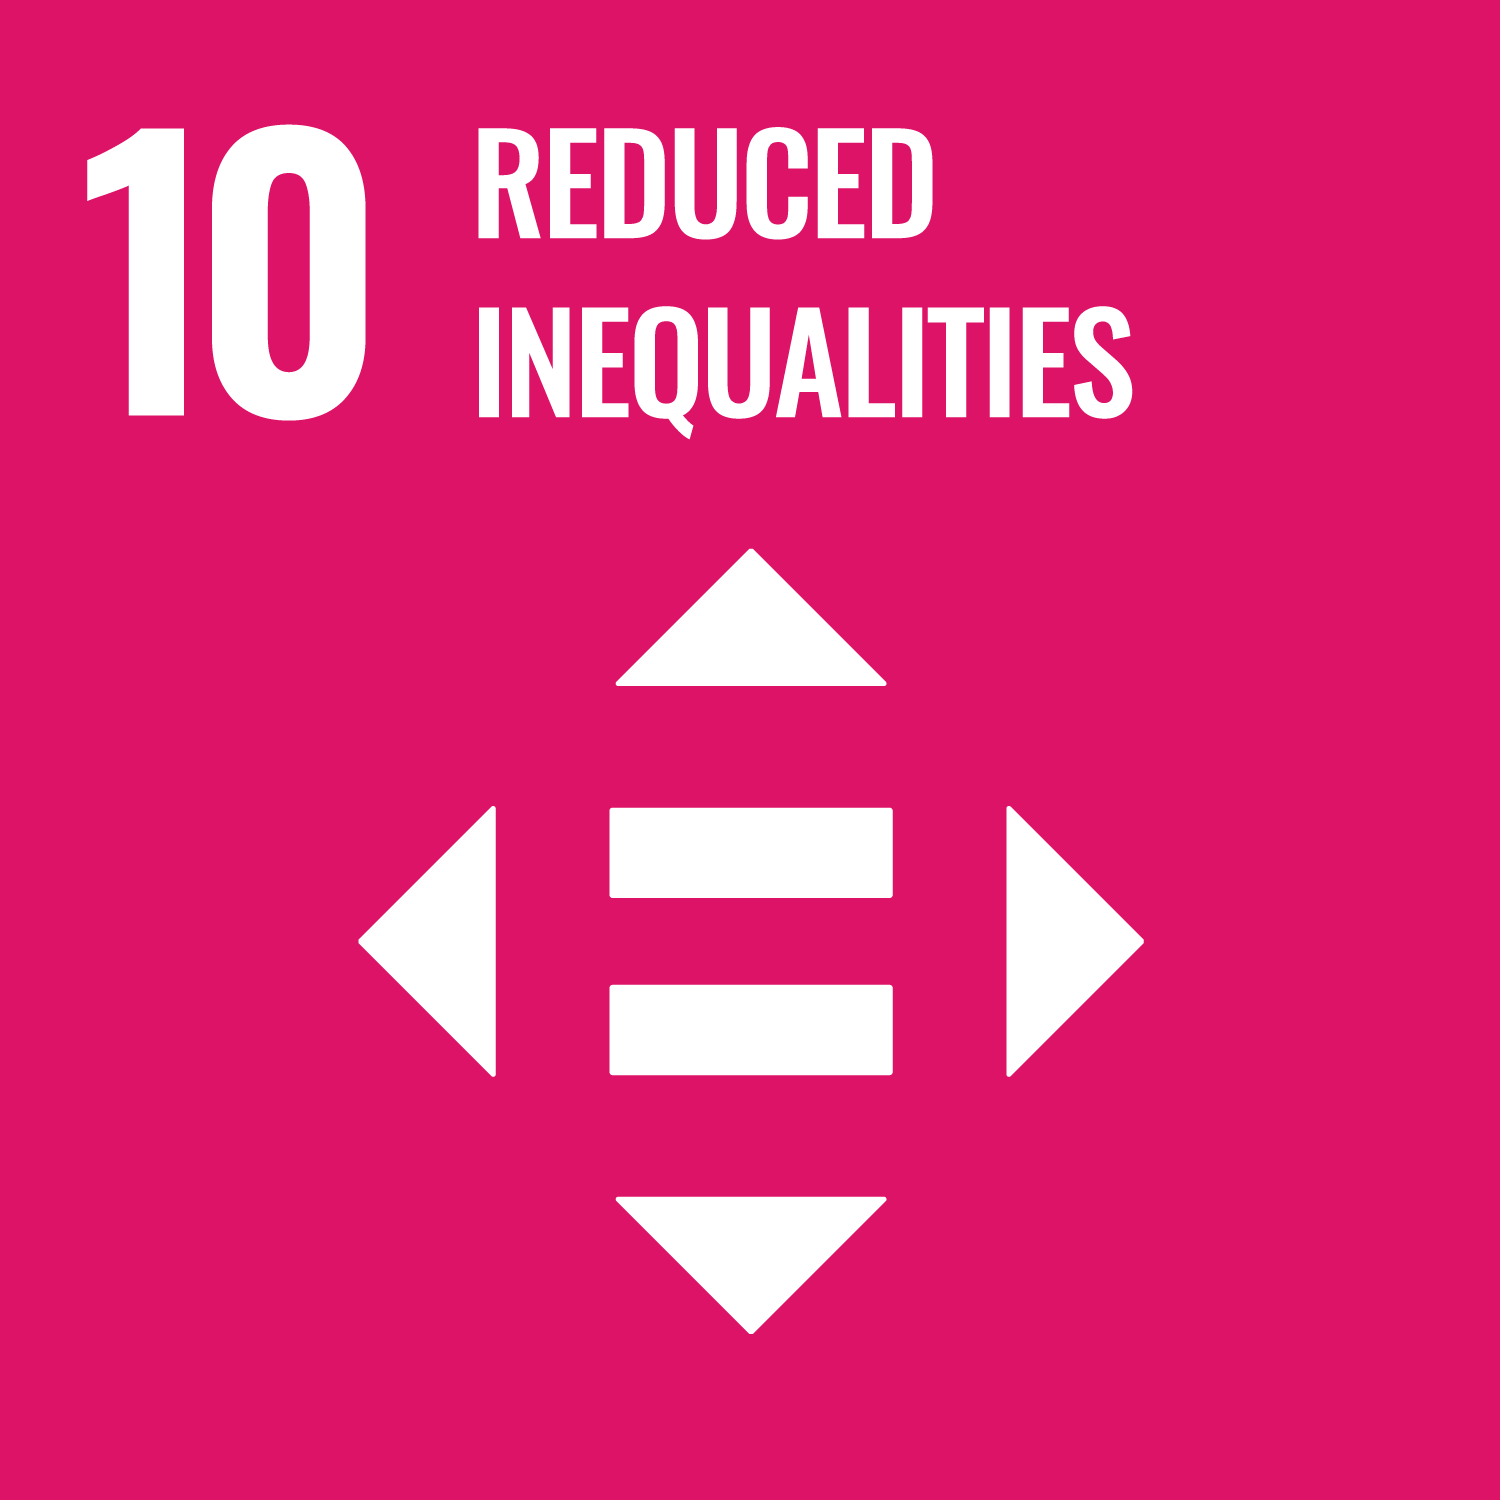 10 Reduced Inequalities (UN Goal)